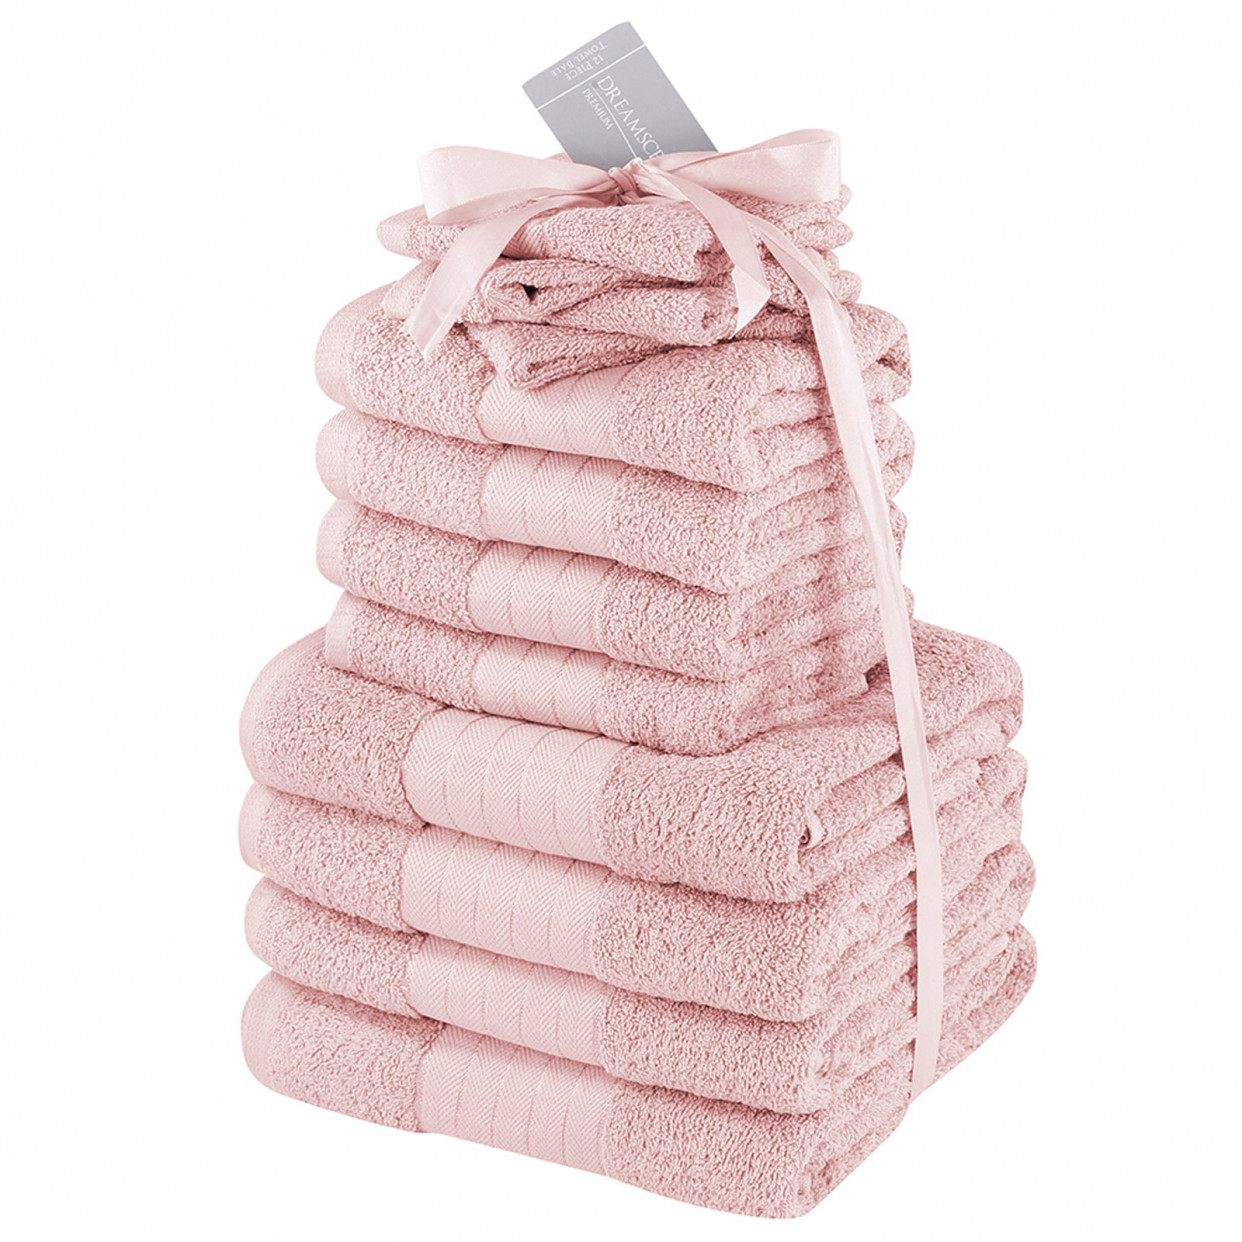 Dreamscene Towel Bale 12 Piece - Blush Pink>